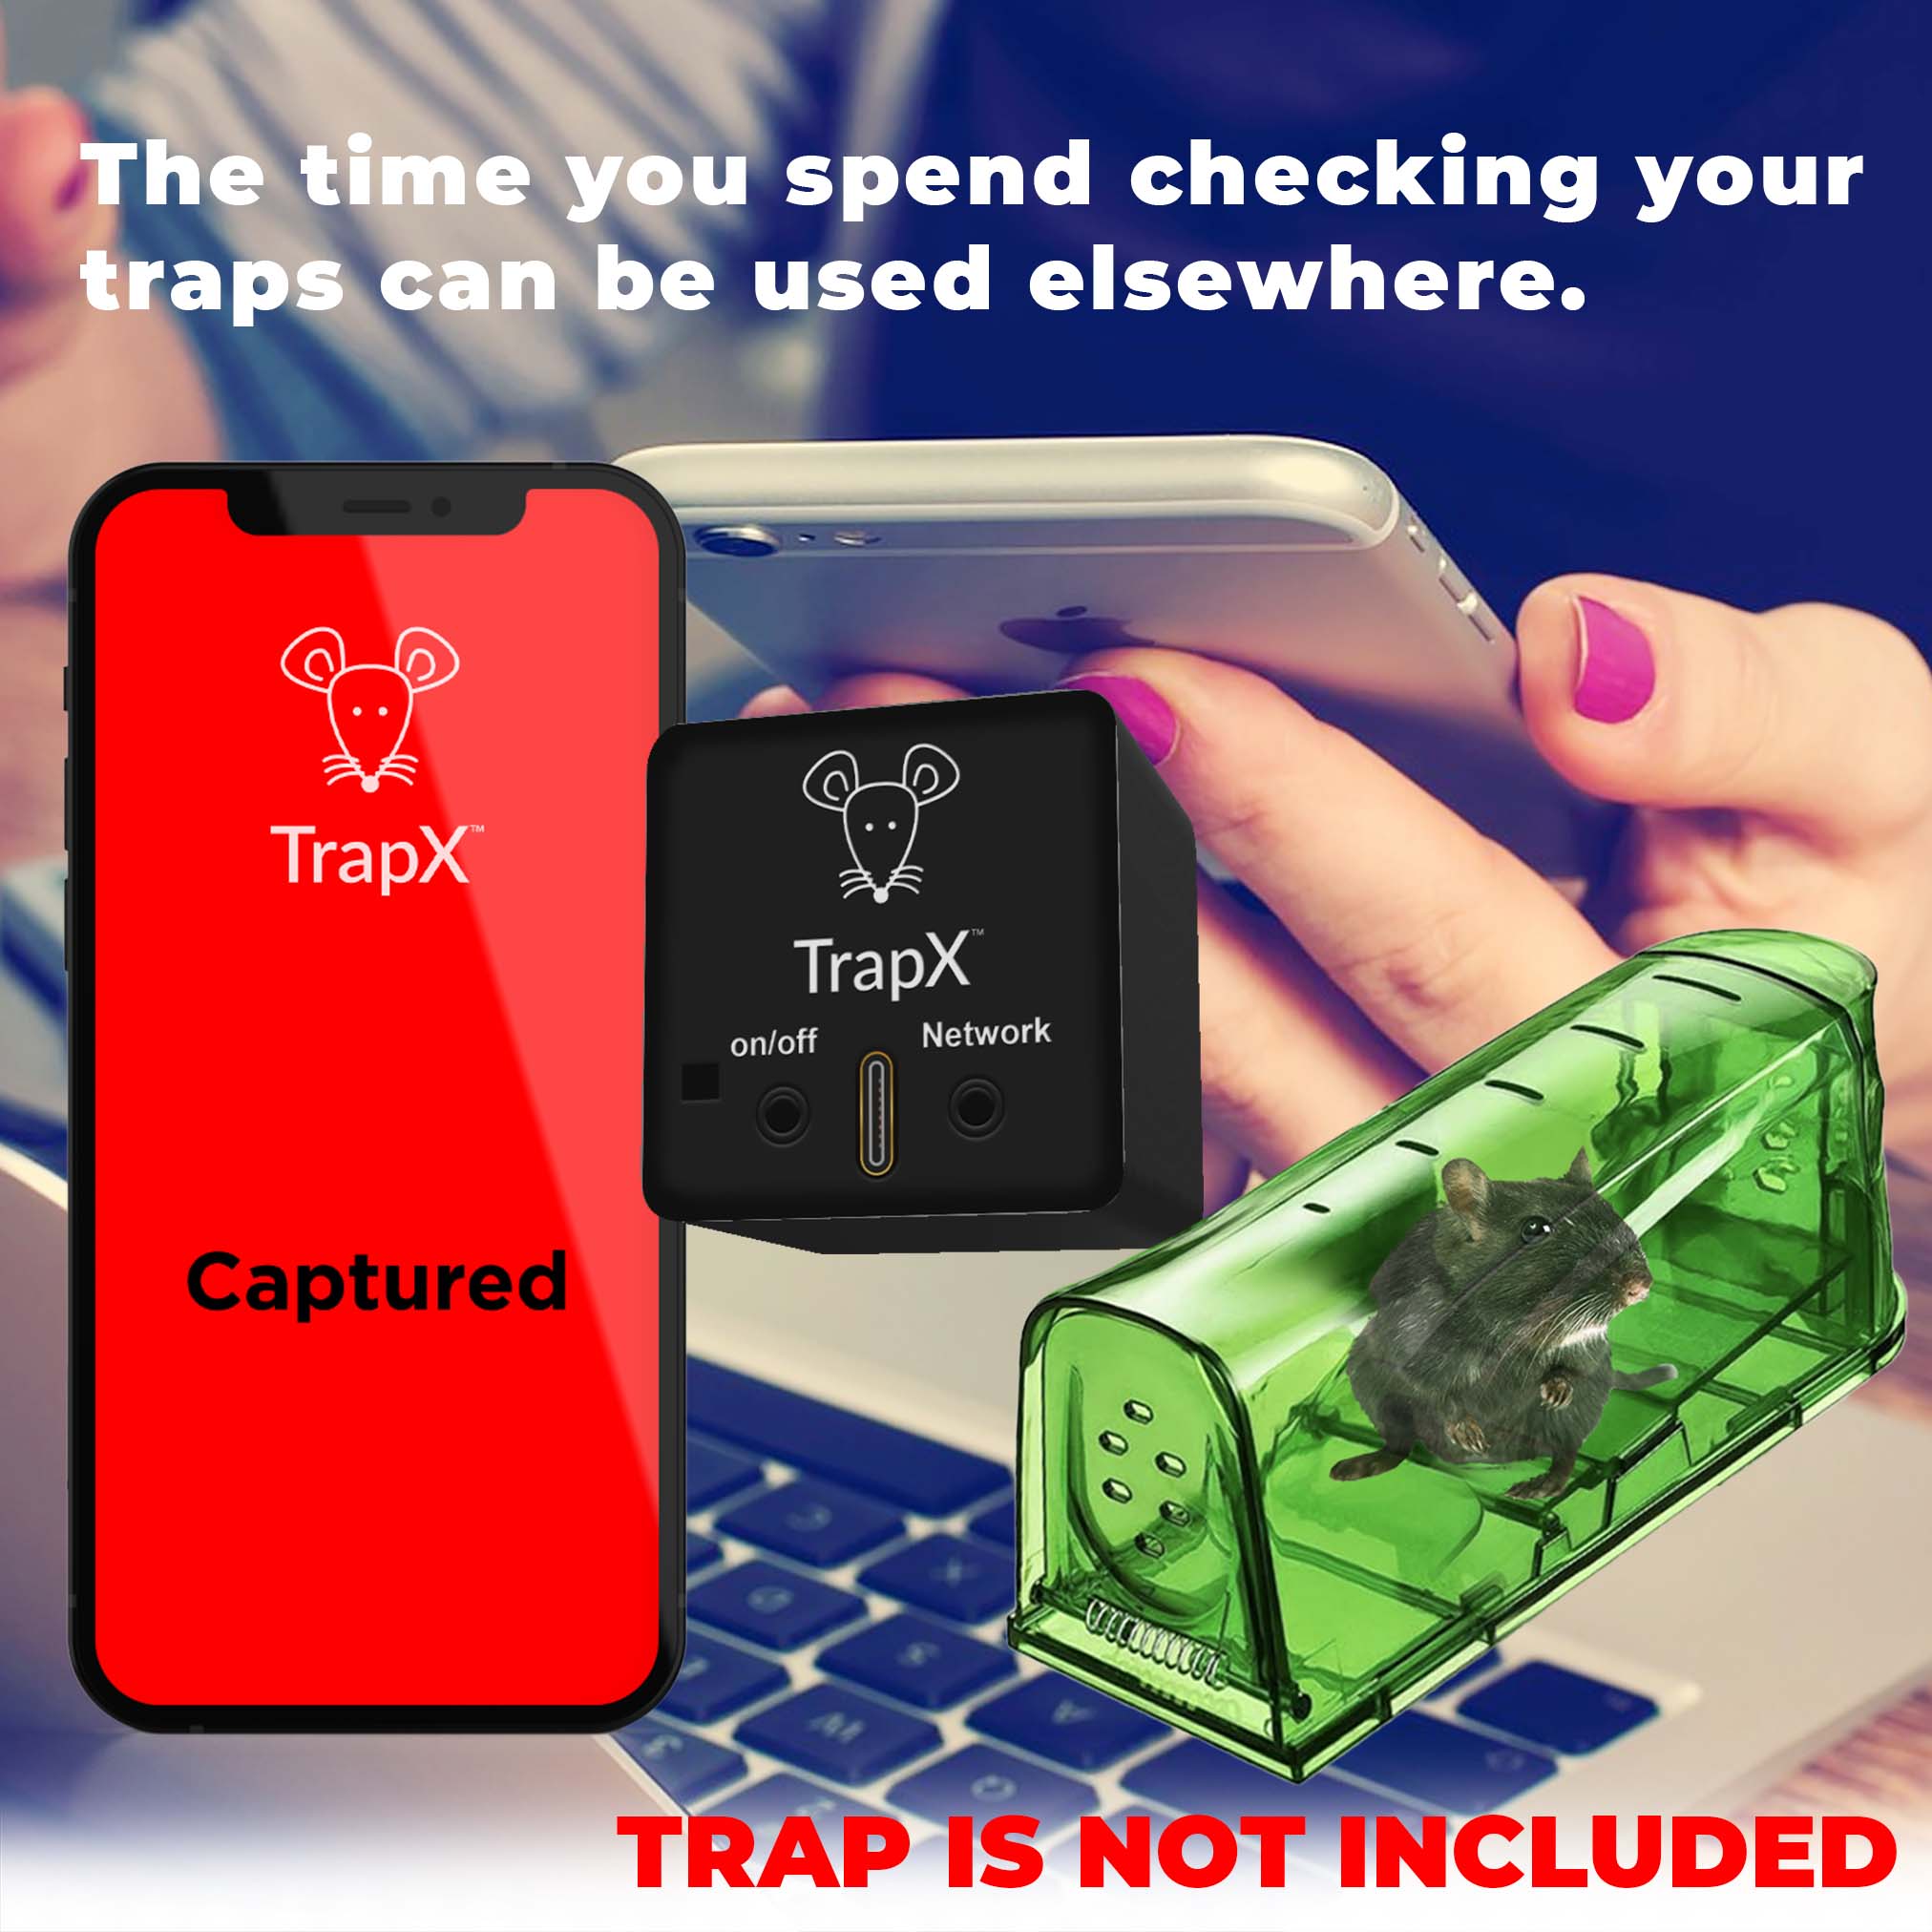 lowes mouse traps